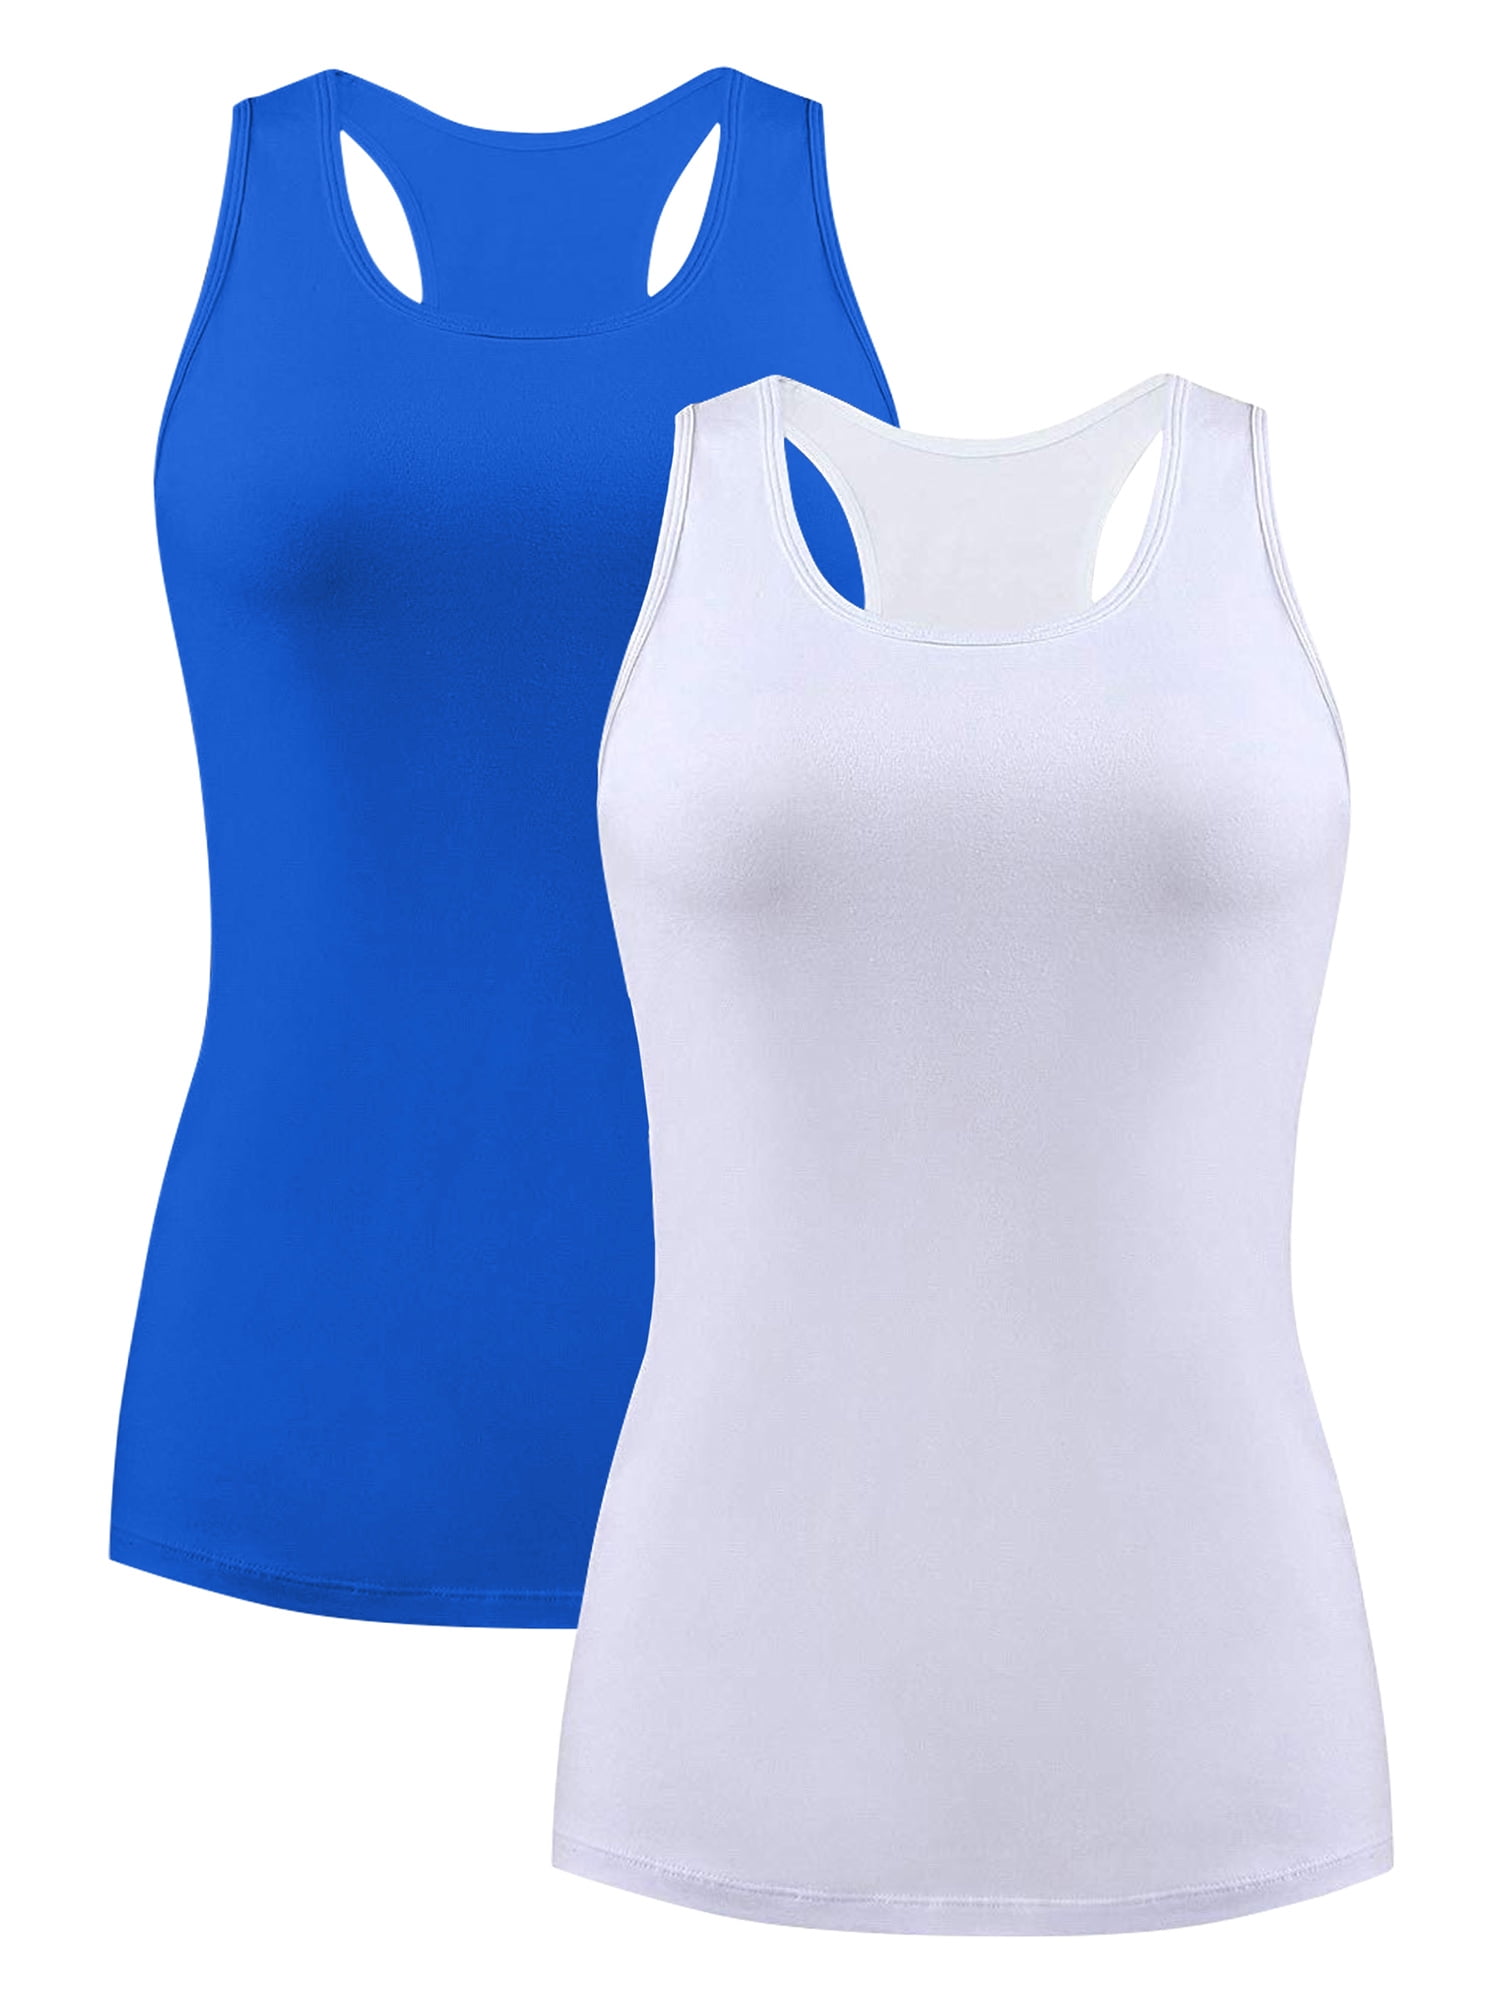 Women's Cotton Racerback Camis Tank Tops with Shelf Bra Undershirt, 2 Pack  